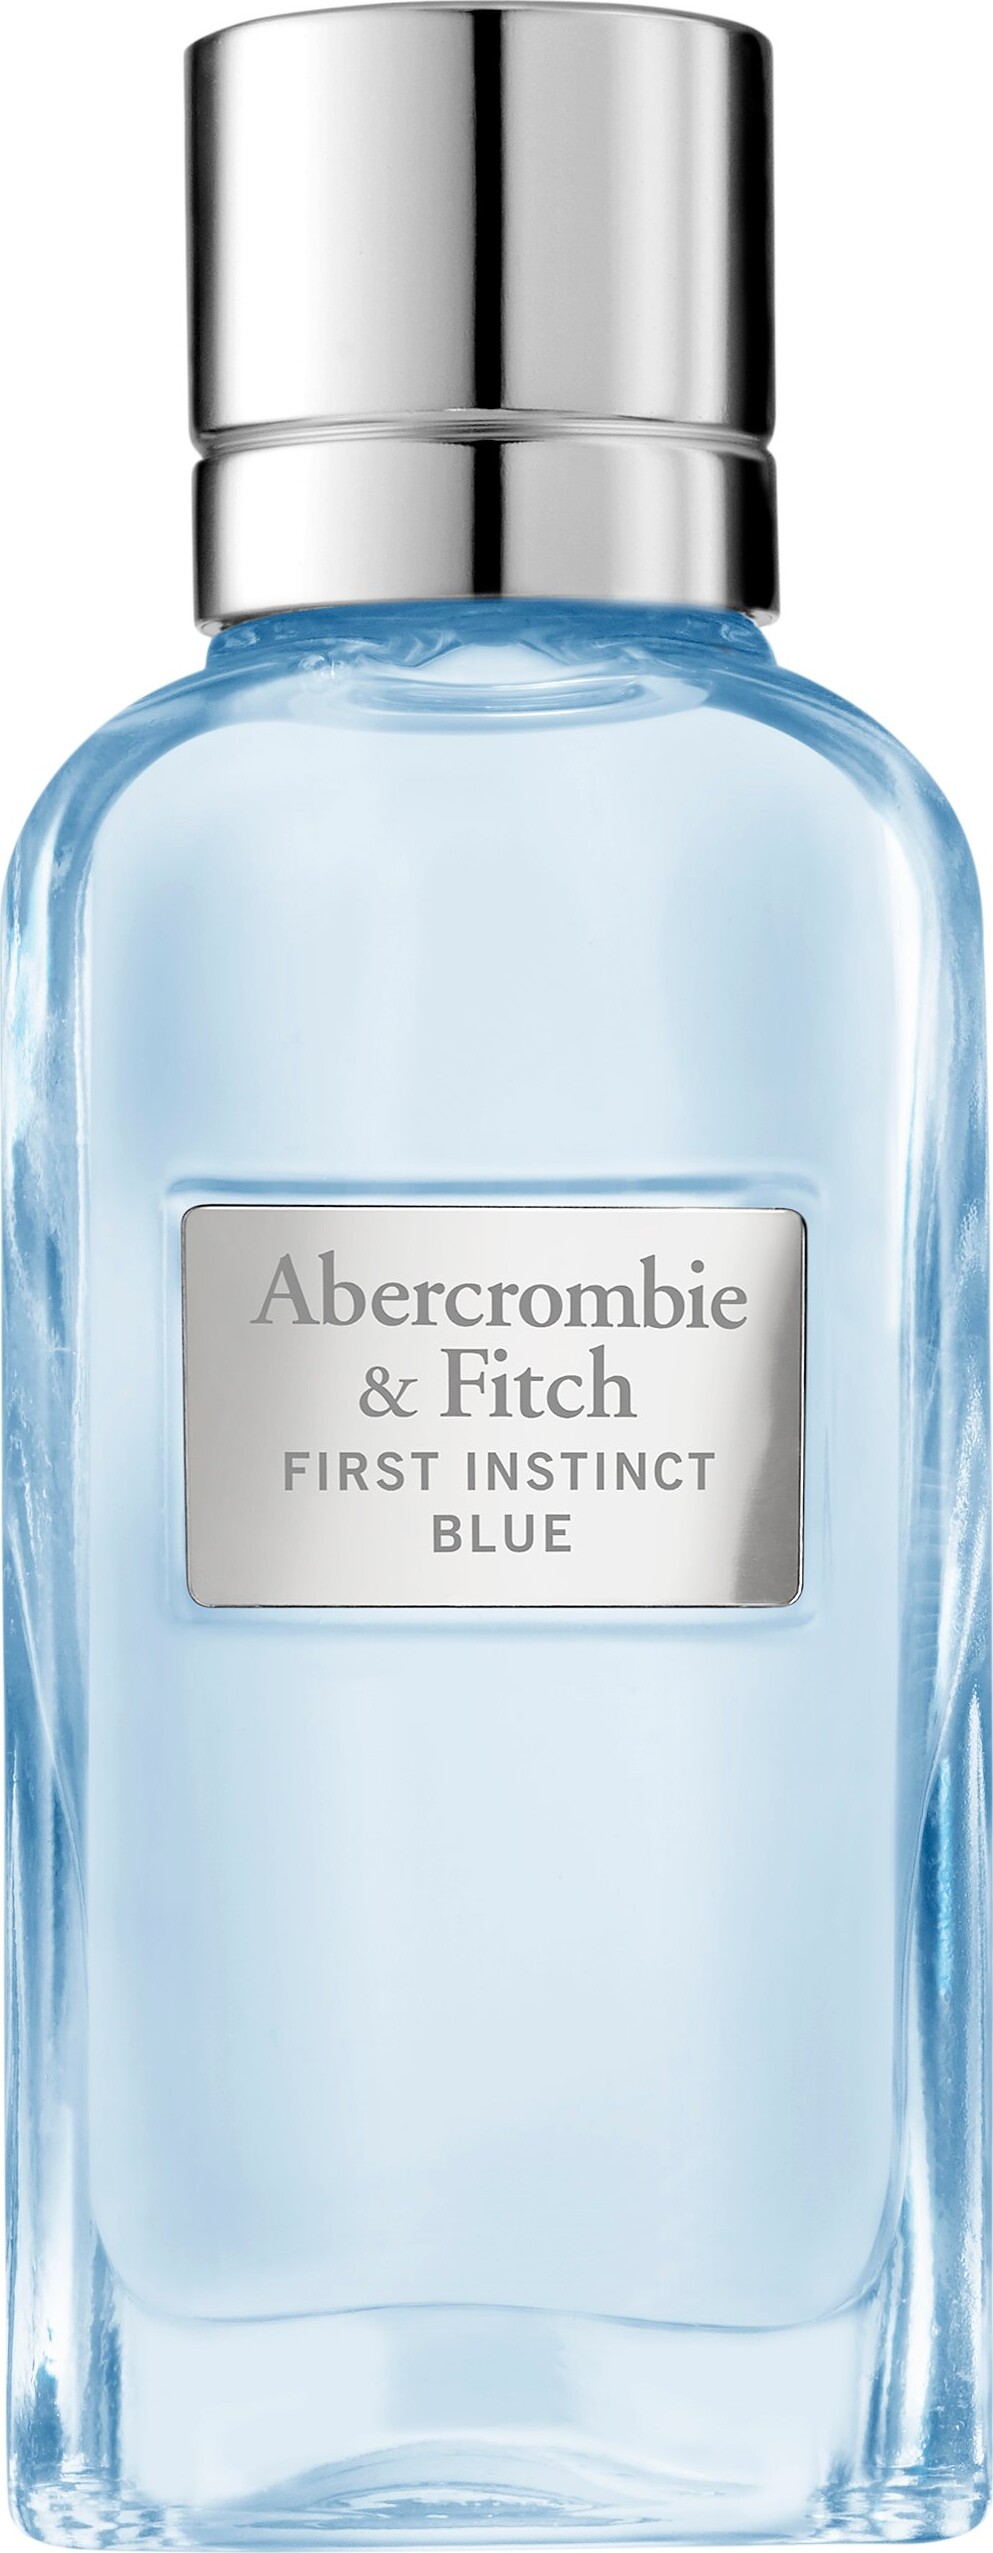 Se Abercrombie & Fitch Dameparfume - First Instict Blue Edp 30 Ml hos Gucca.dk